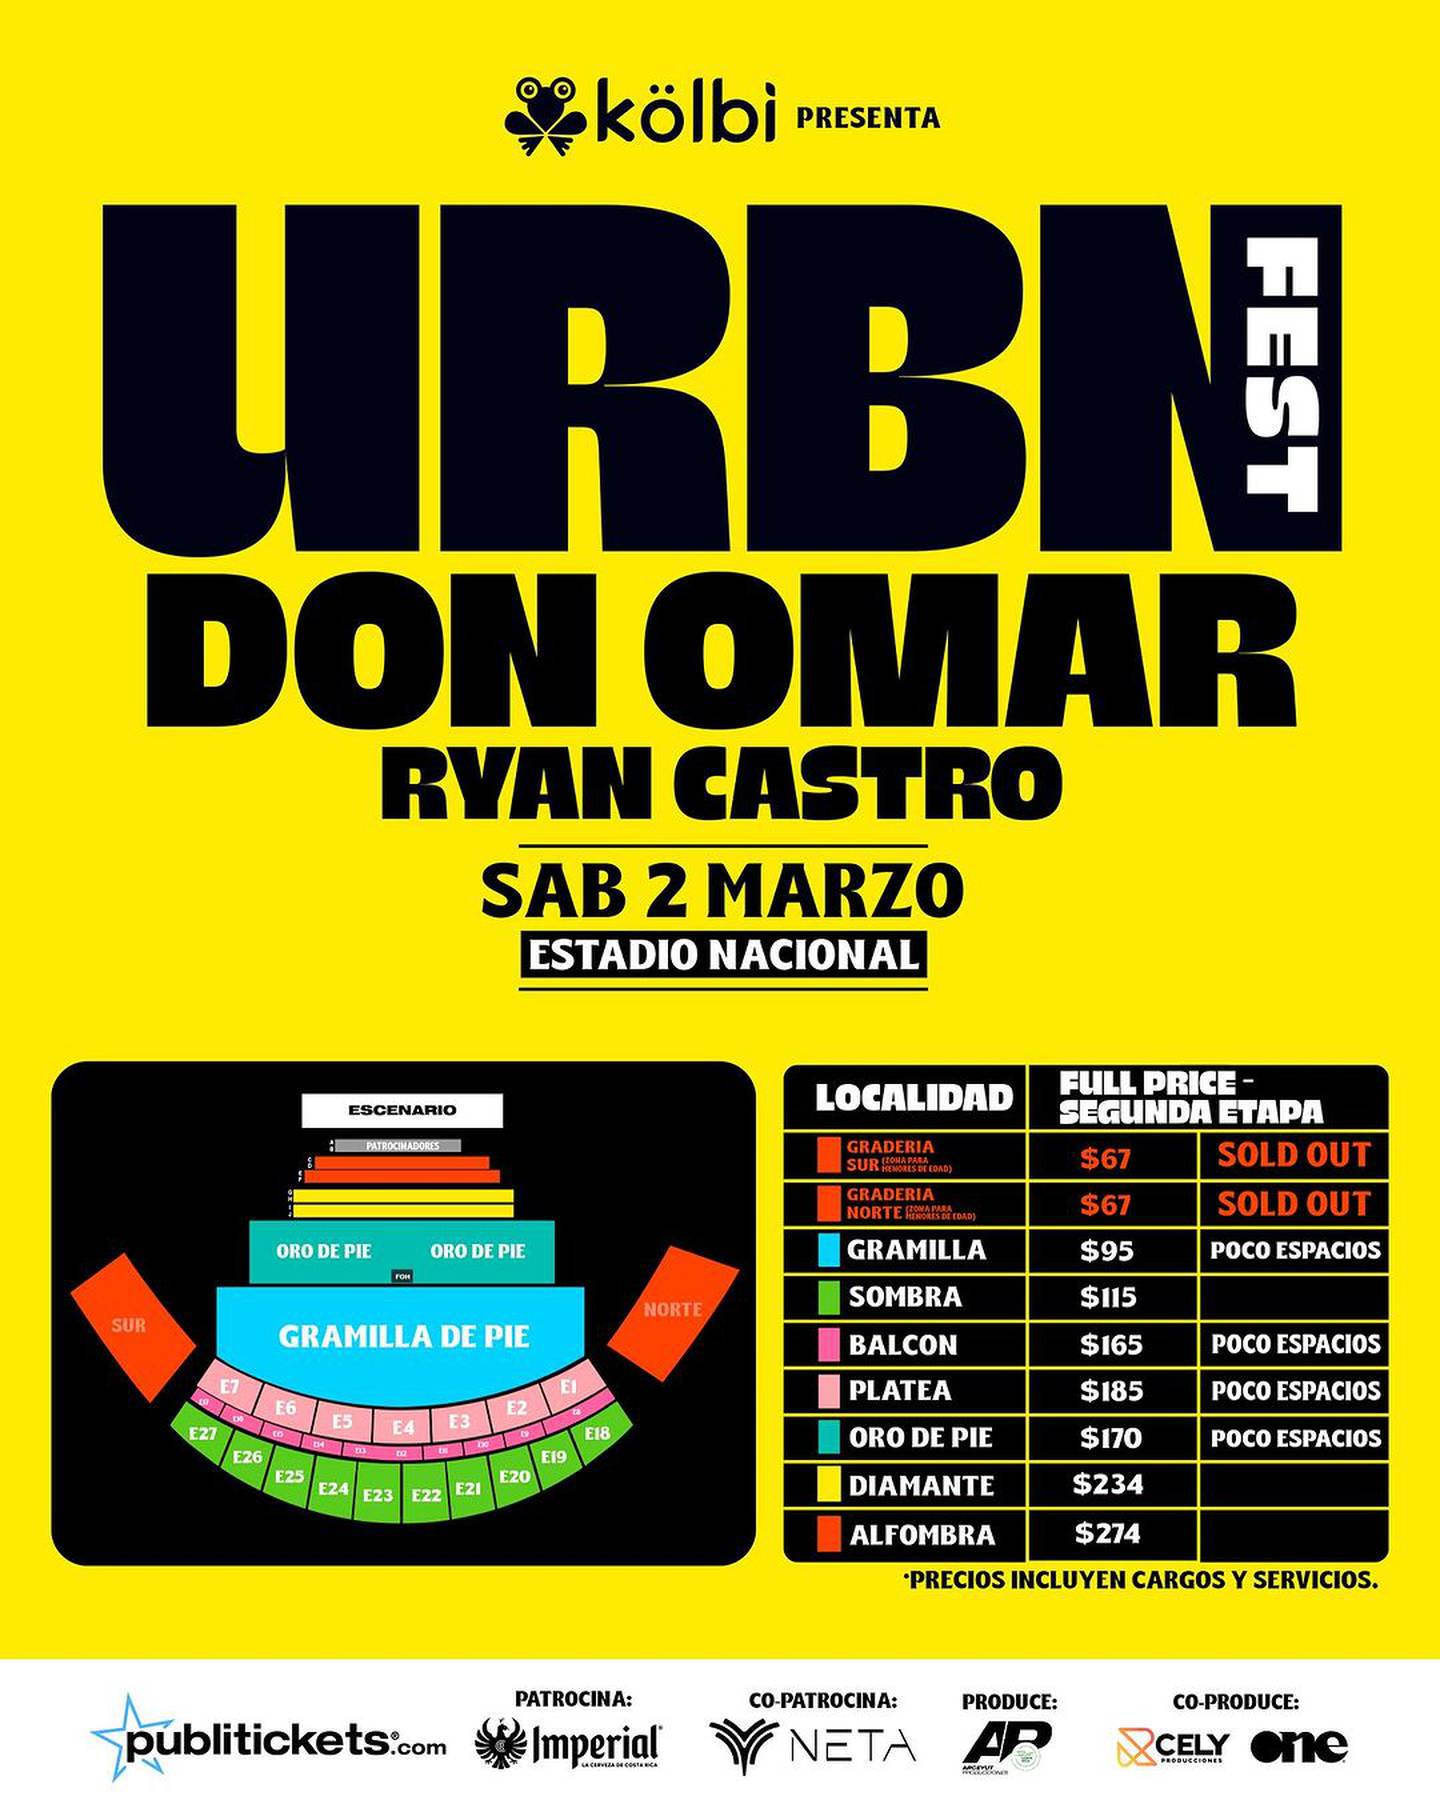 Urban Fest